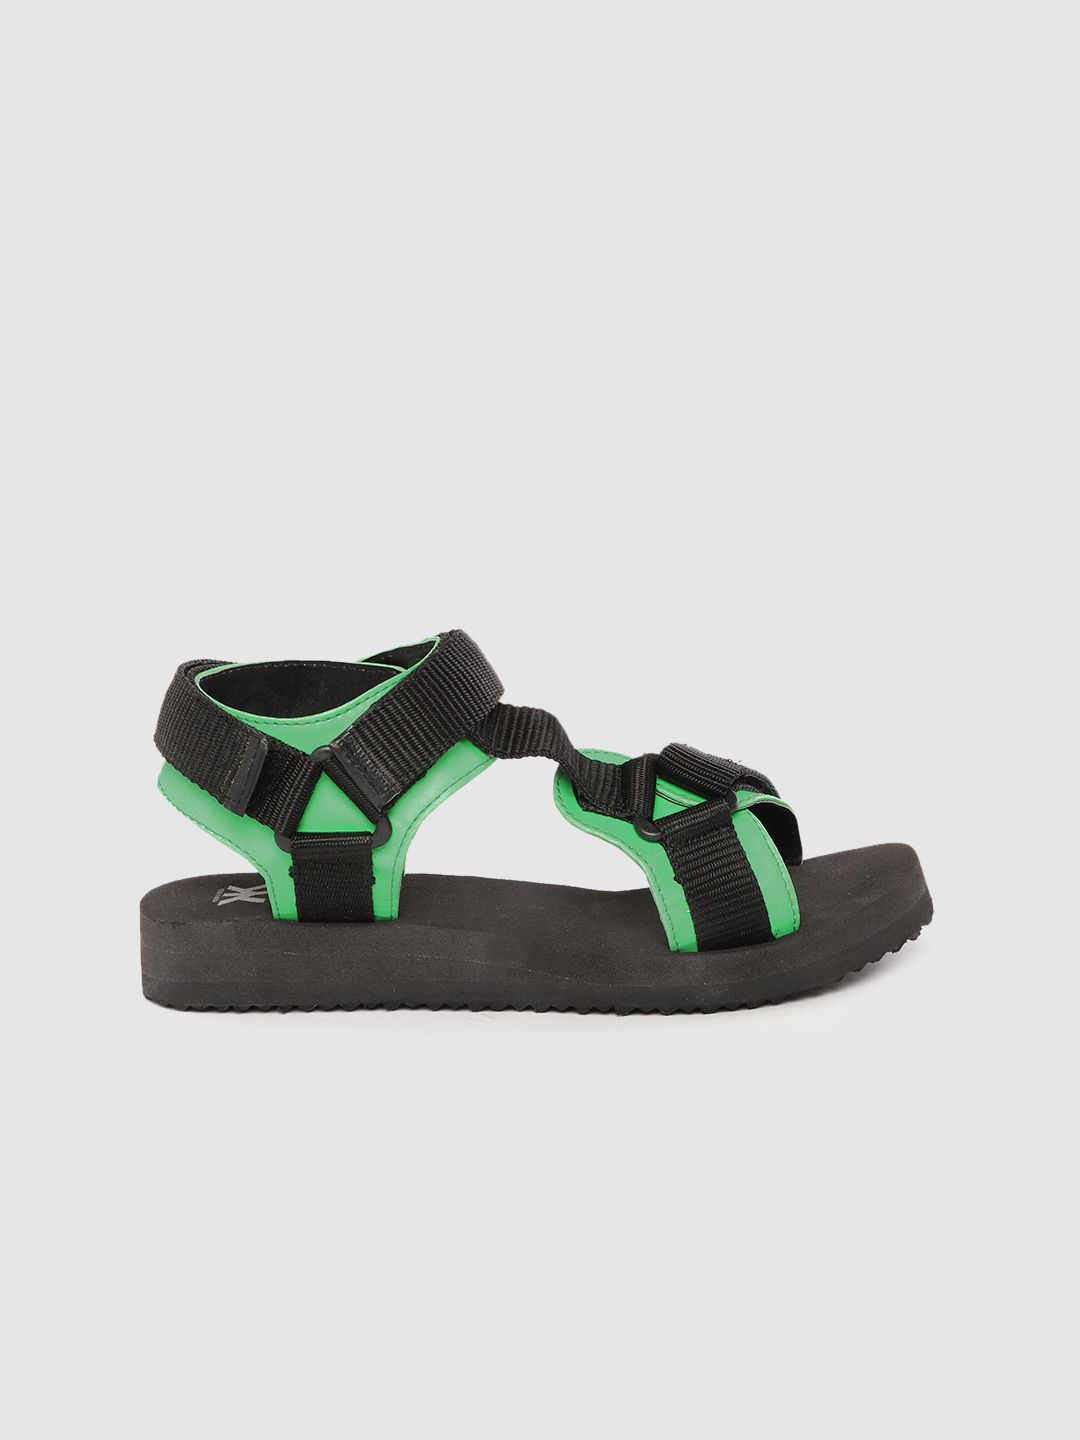 Kook N Keech Women Black & Green Colourblocked Sports Sandals Price in India